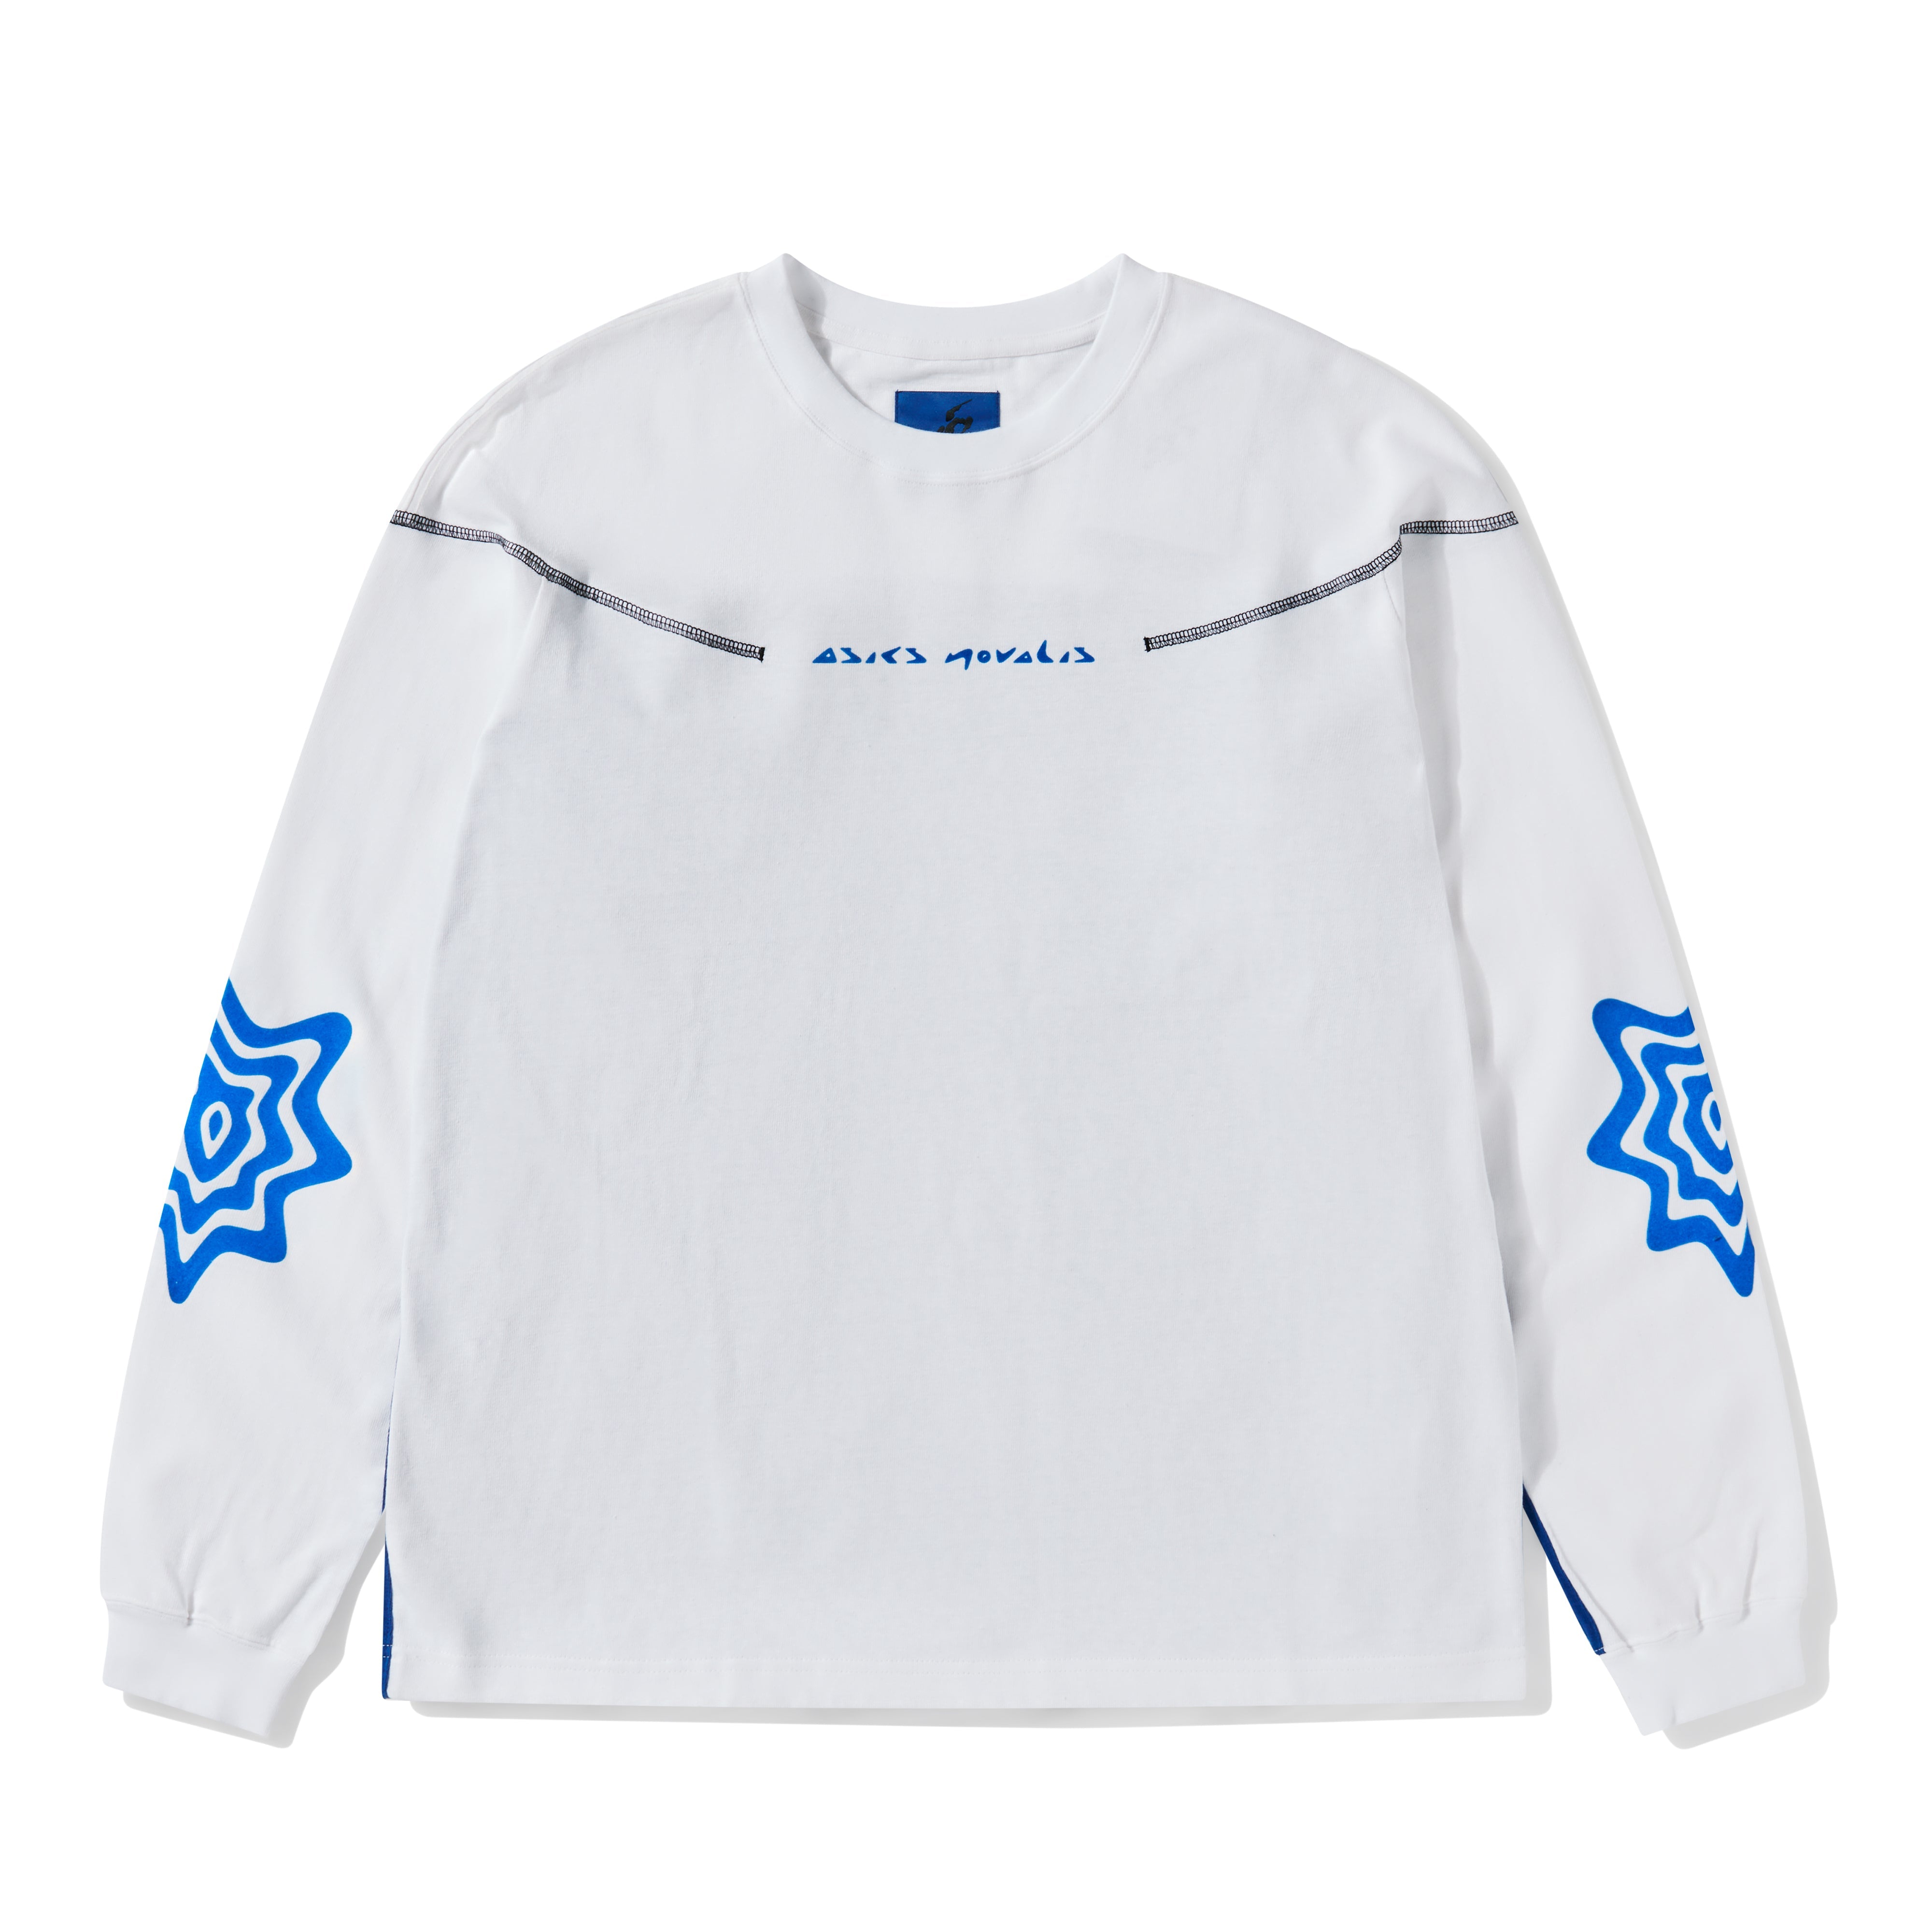 Asics - Bixance Long Sleeve T-Shirt - (Optic White / Obsidian